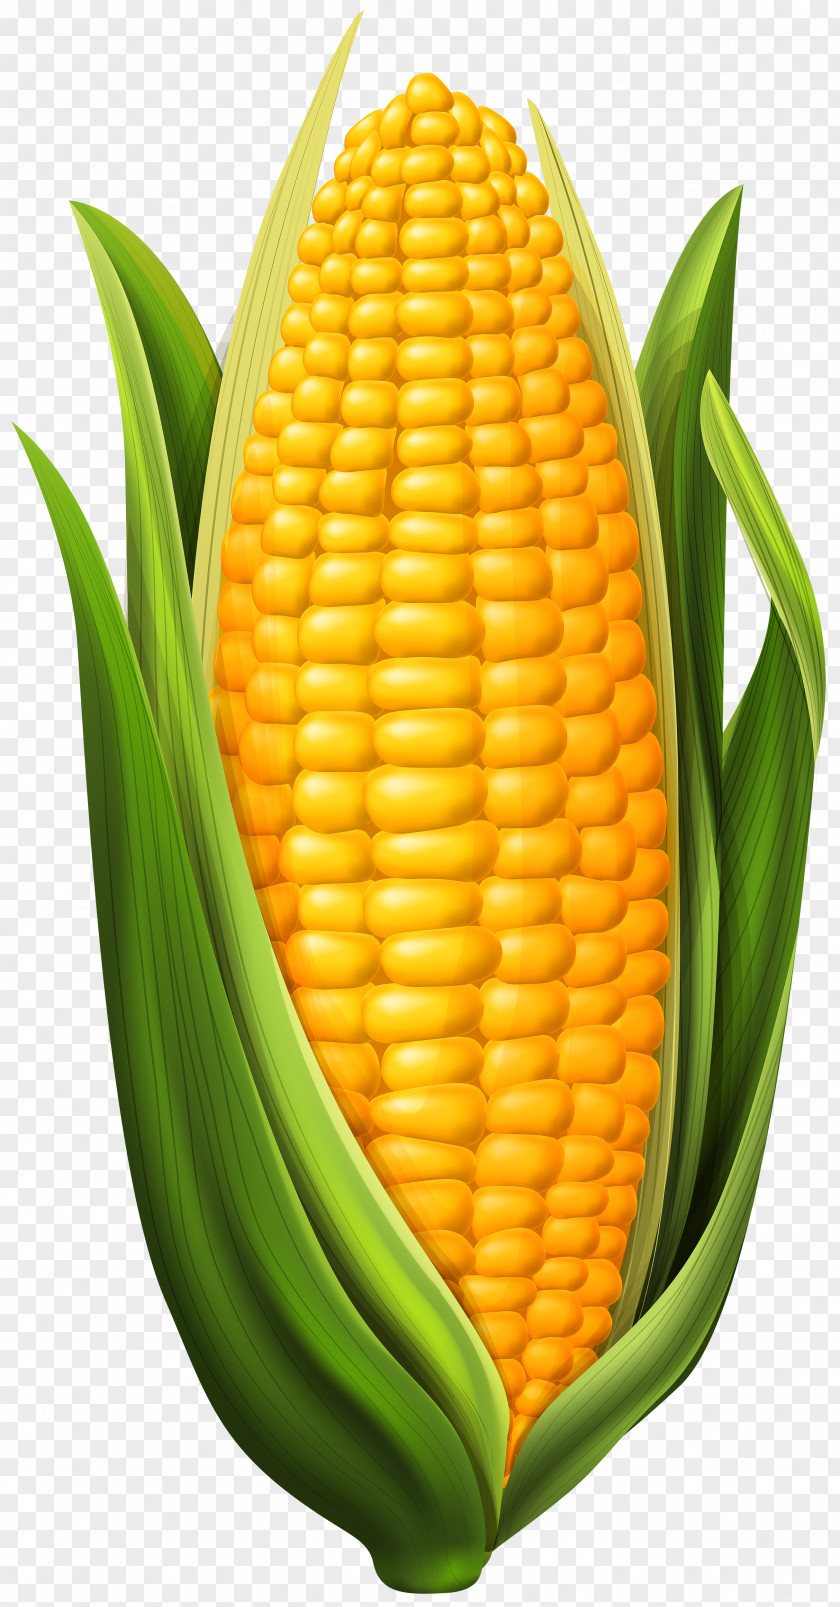 Corn Clip Art Image On The Cob Maize PNG